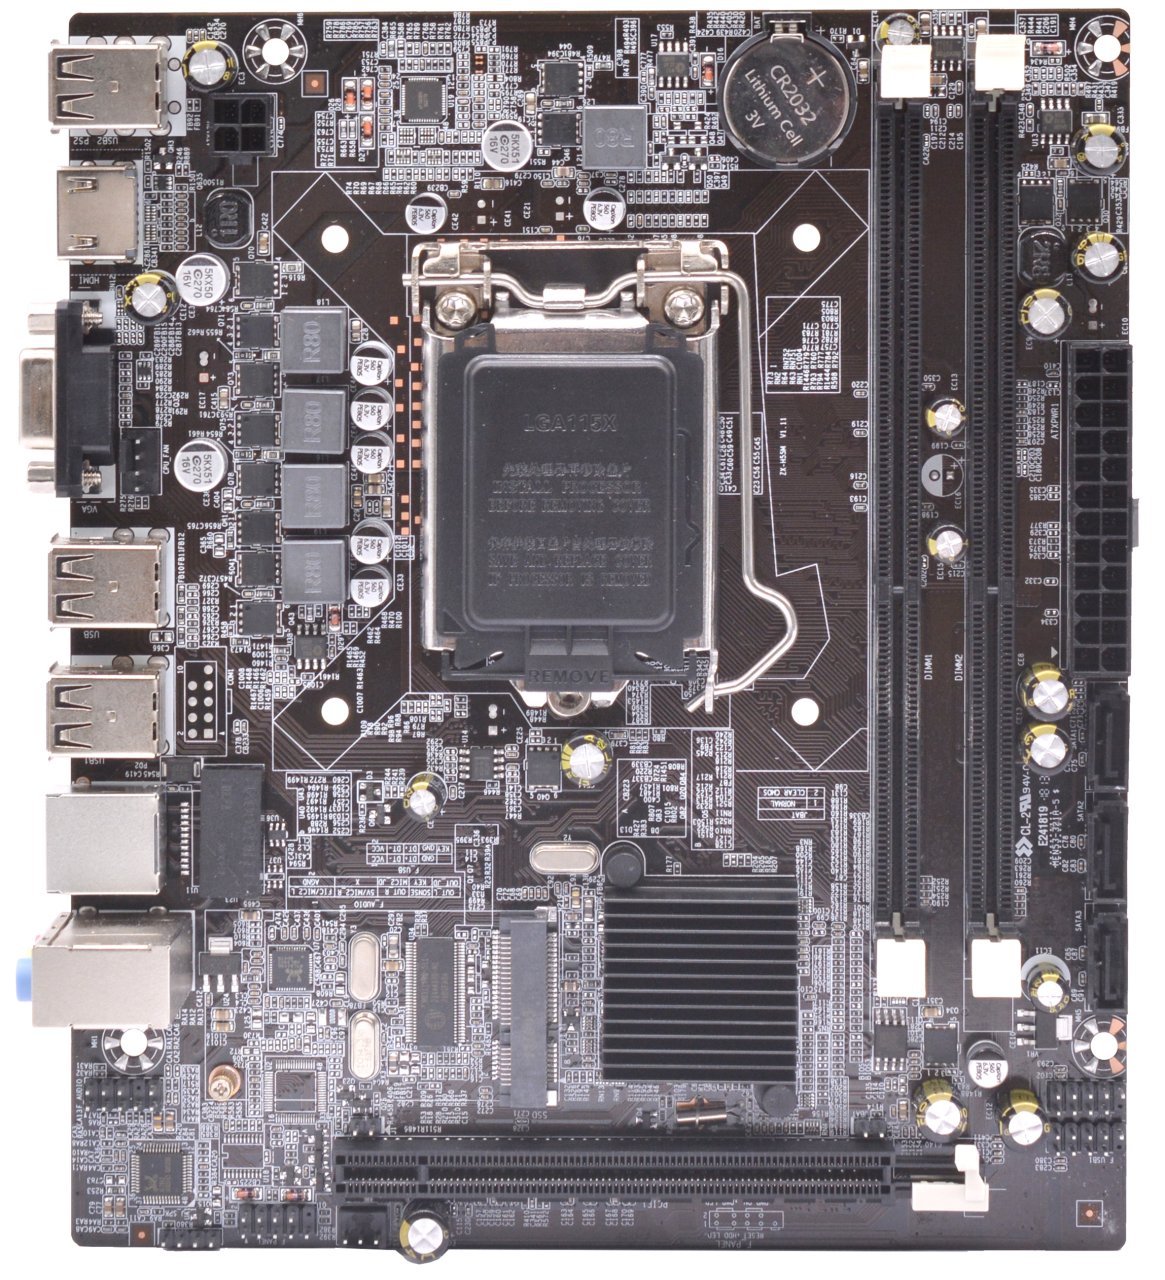 AFOX IH55-MA4 H55 DDR3 INTEL 1156PIN MAINBOARD